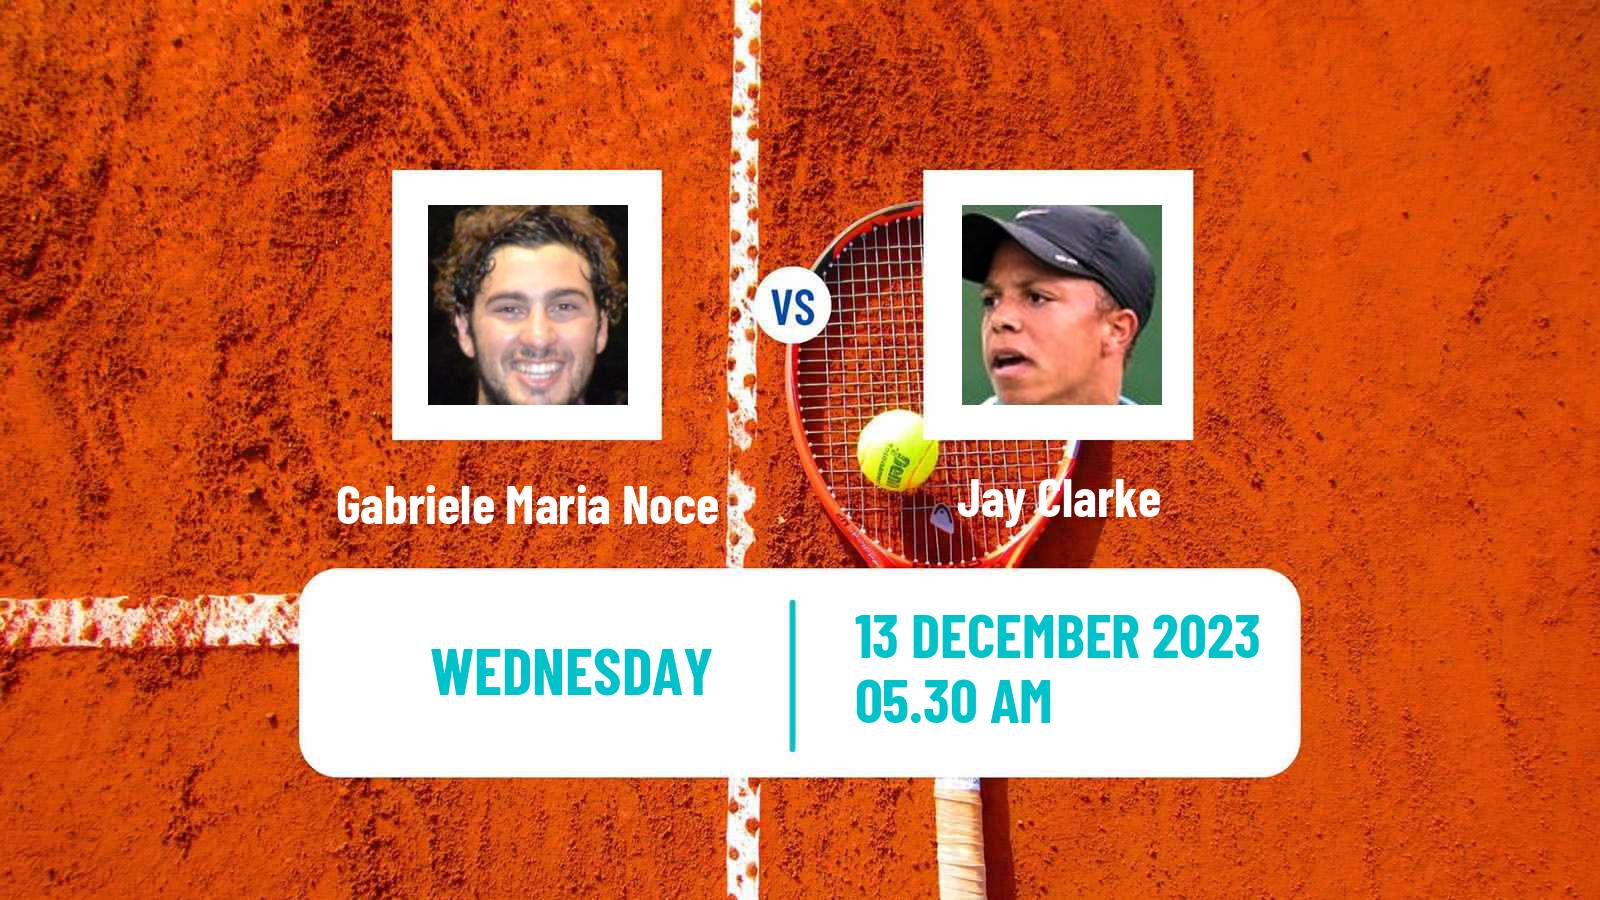 Tennis ITF M15 Antalya 20 Men 2023 Gabriele Maria Noce - Jay Clarke